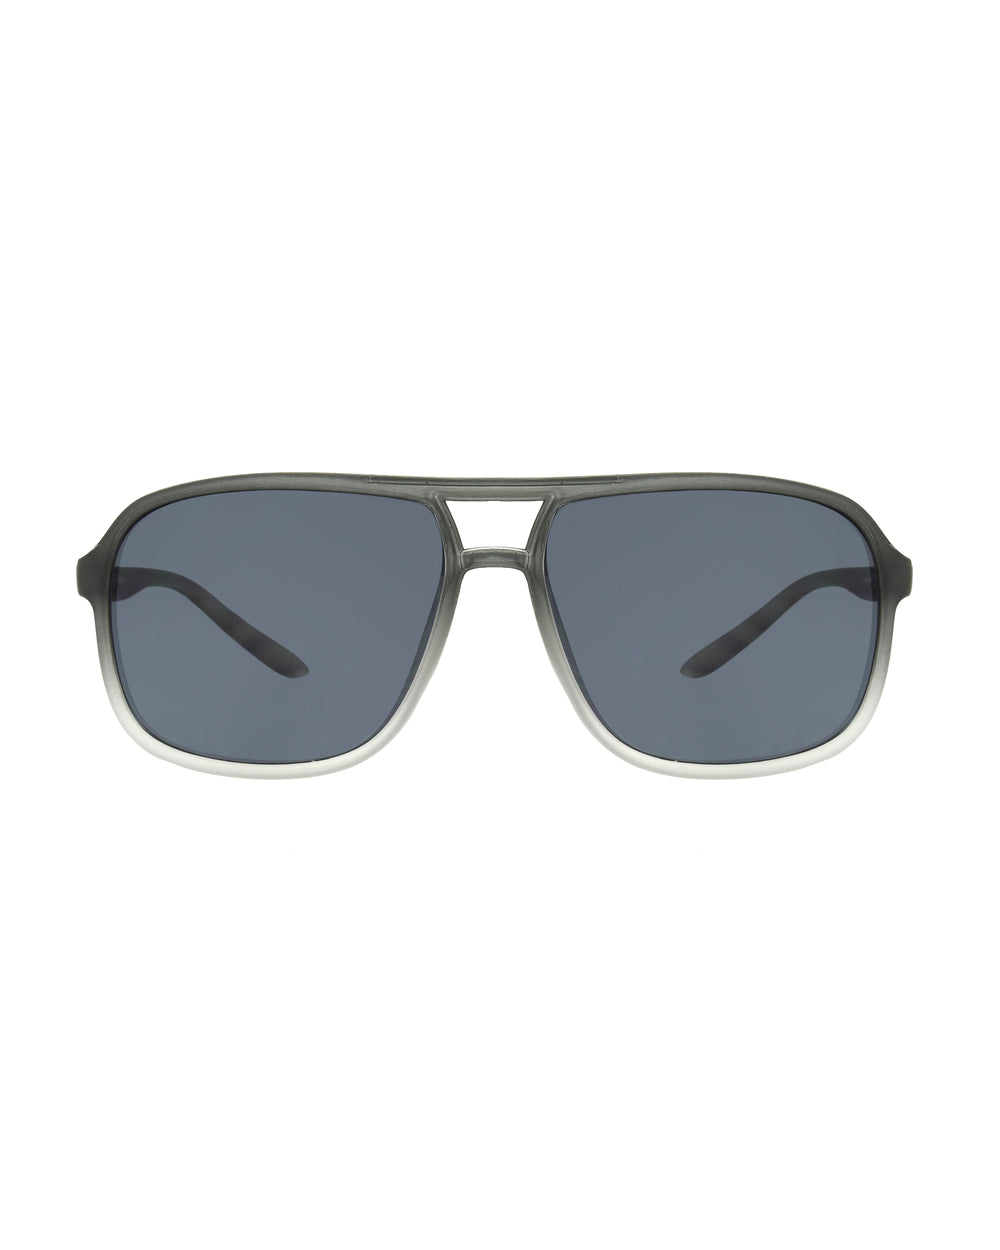 Donnie Aviator Sunglasses - Gray - Body Glove